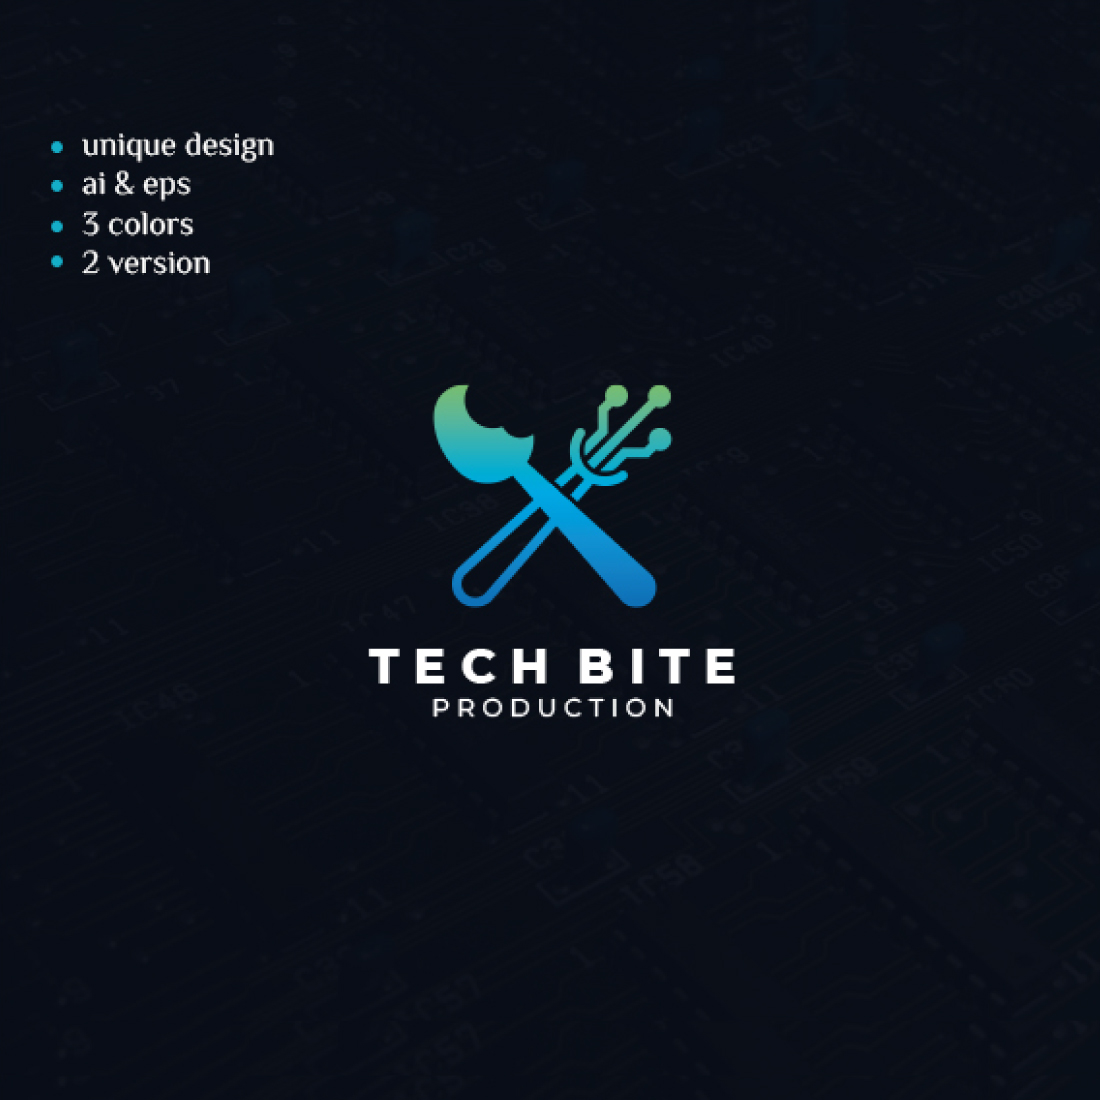 Logo for a tech bite production company.